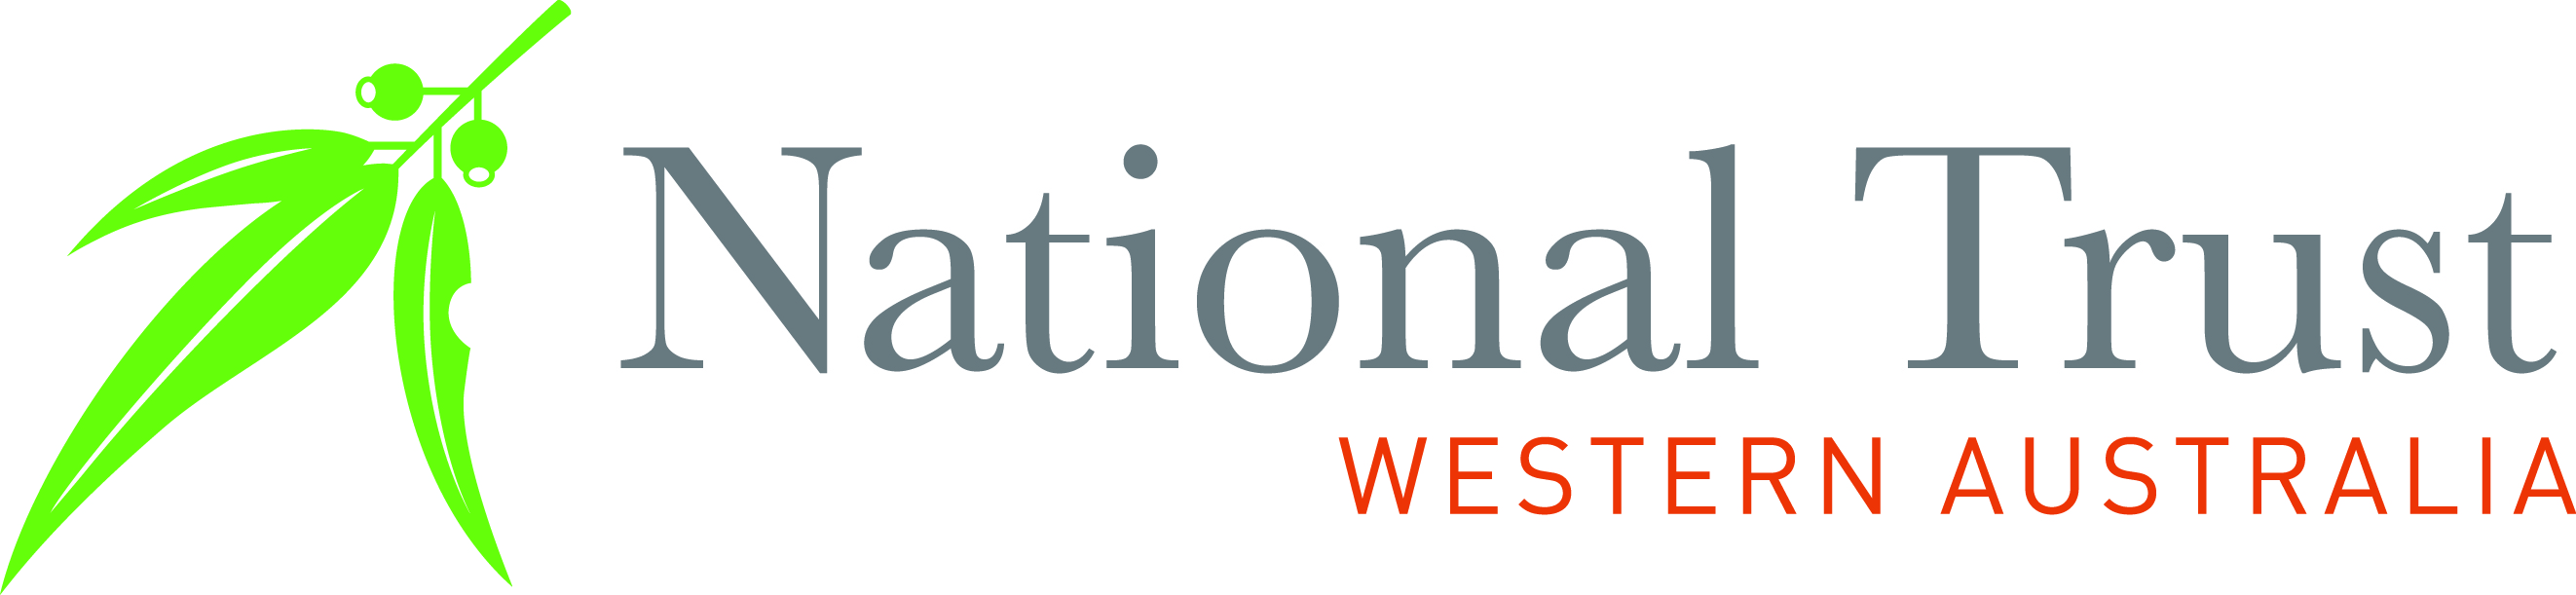 National Trust Western Australia Logo